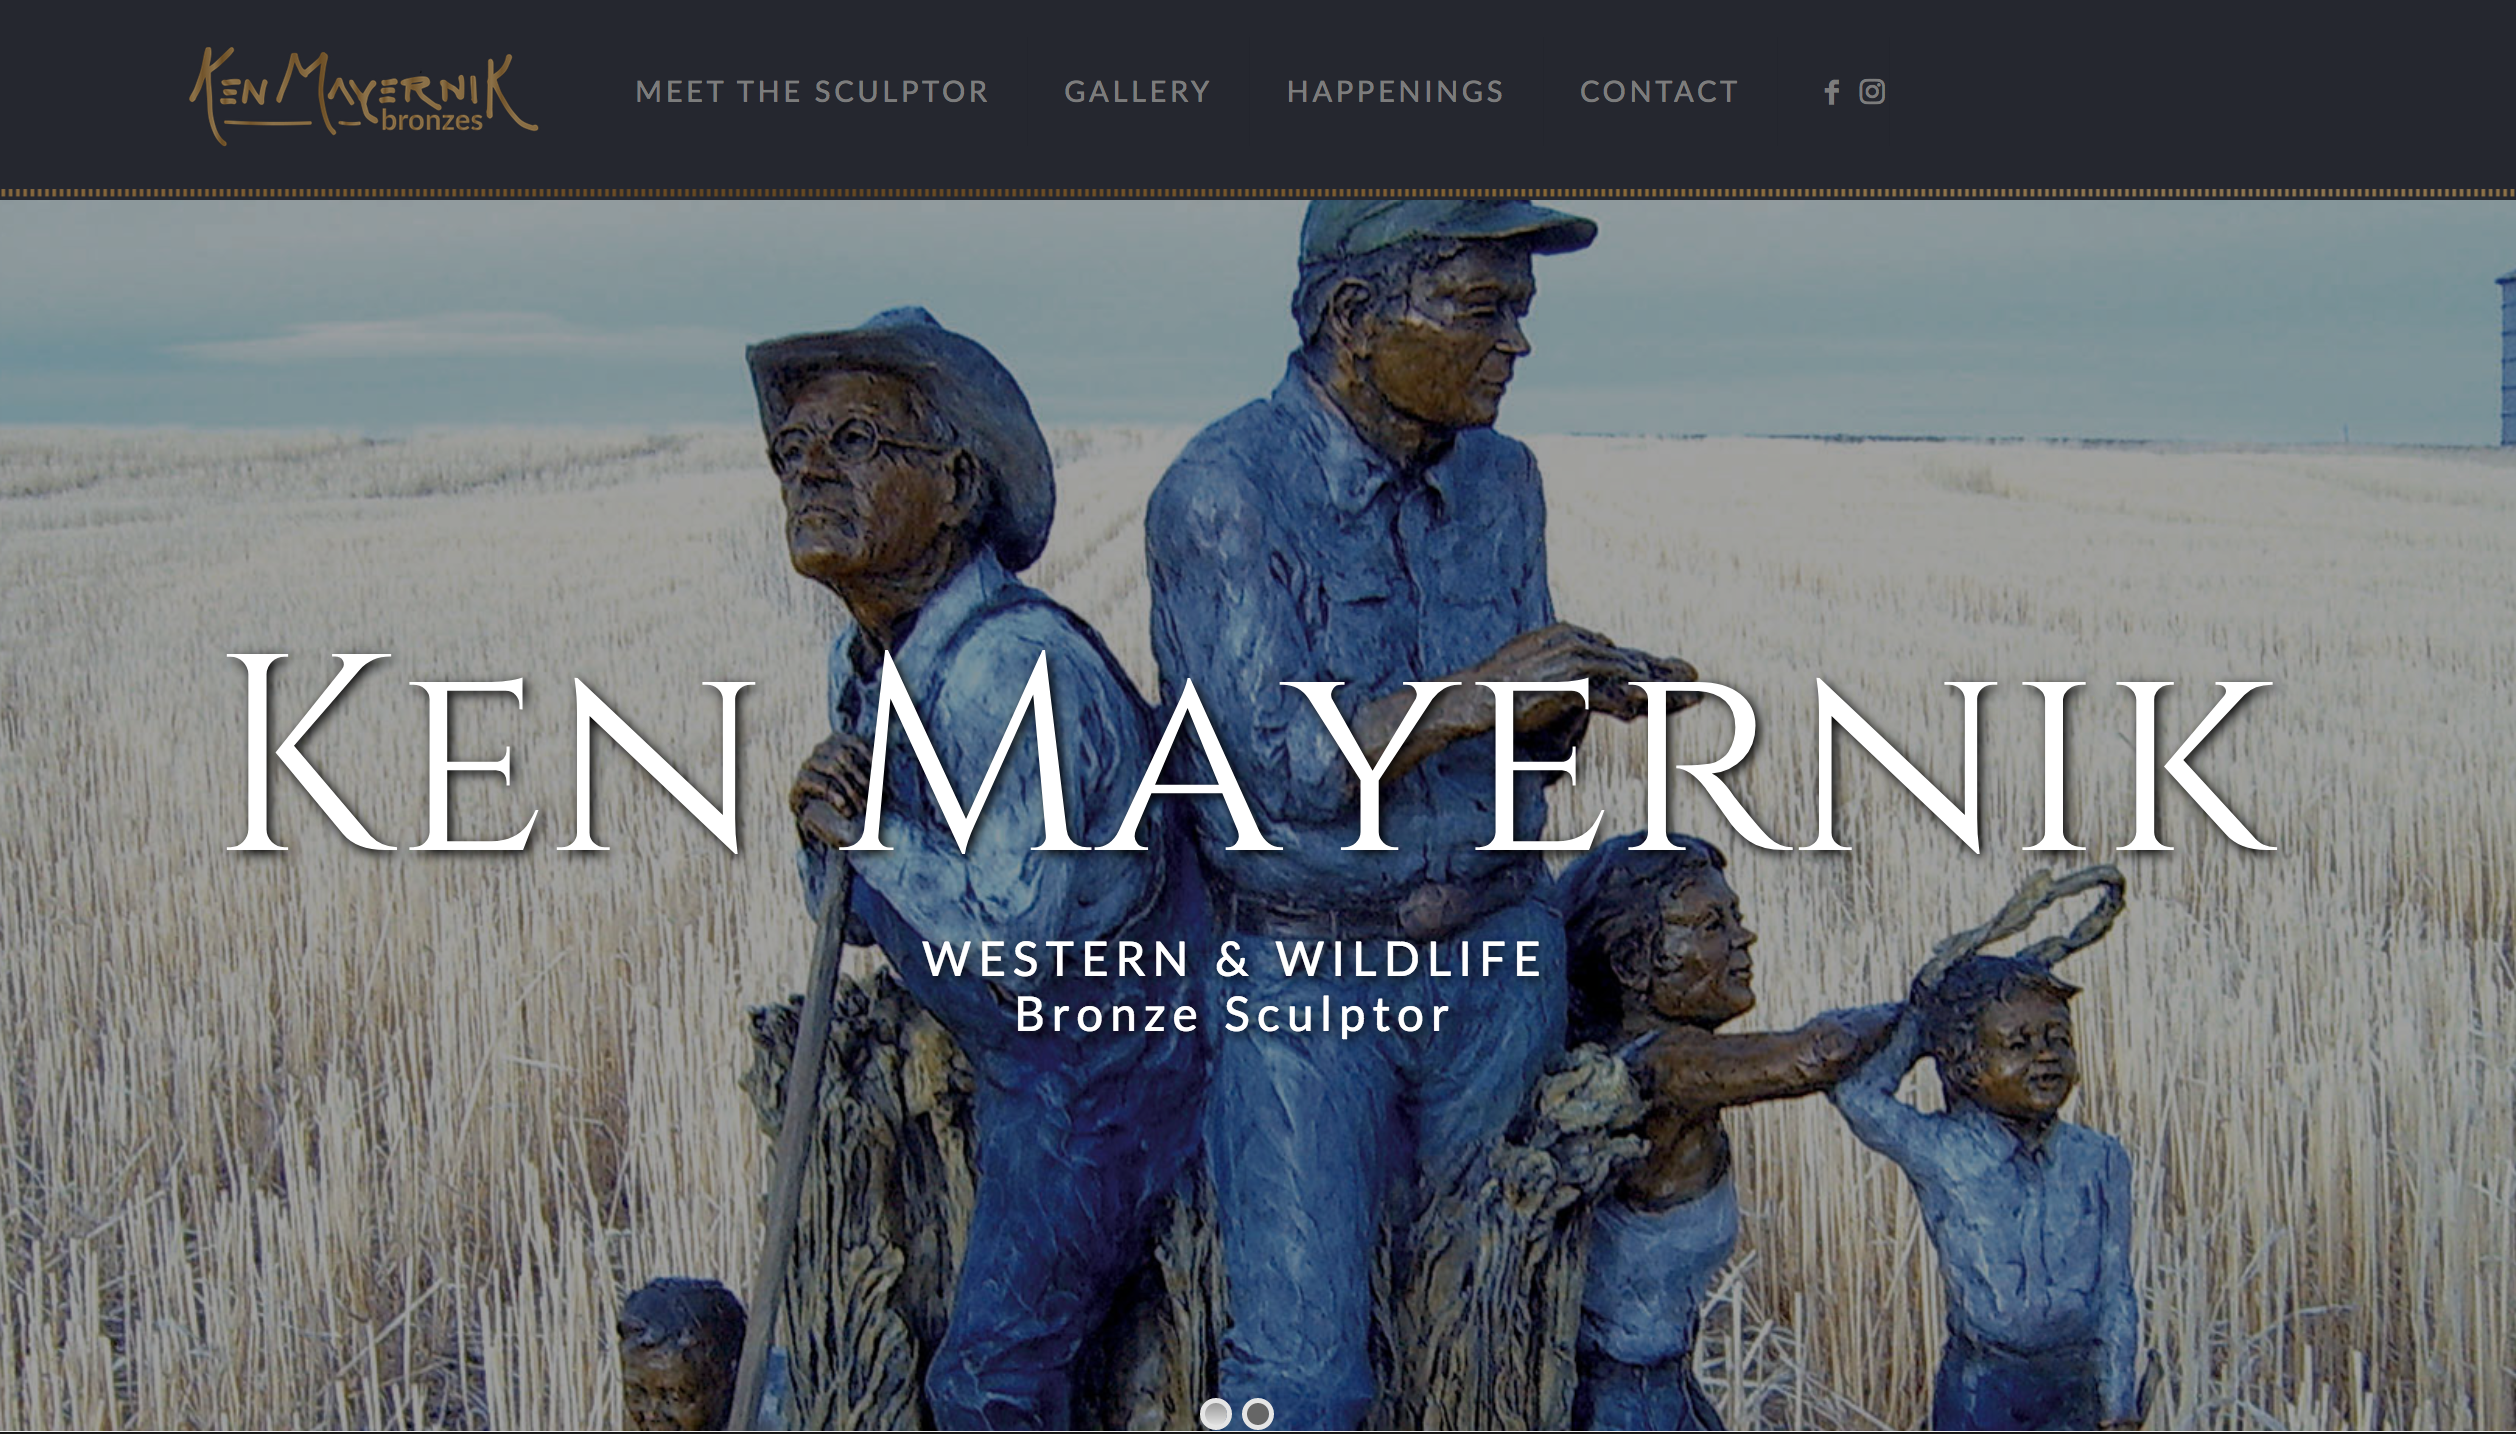 key mayernik bronzes welcome to my website image